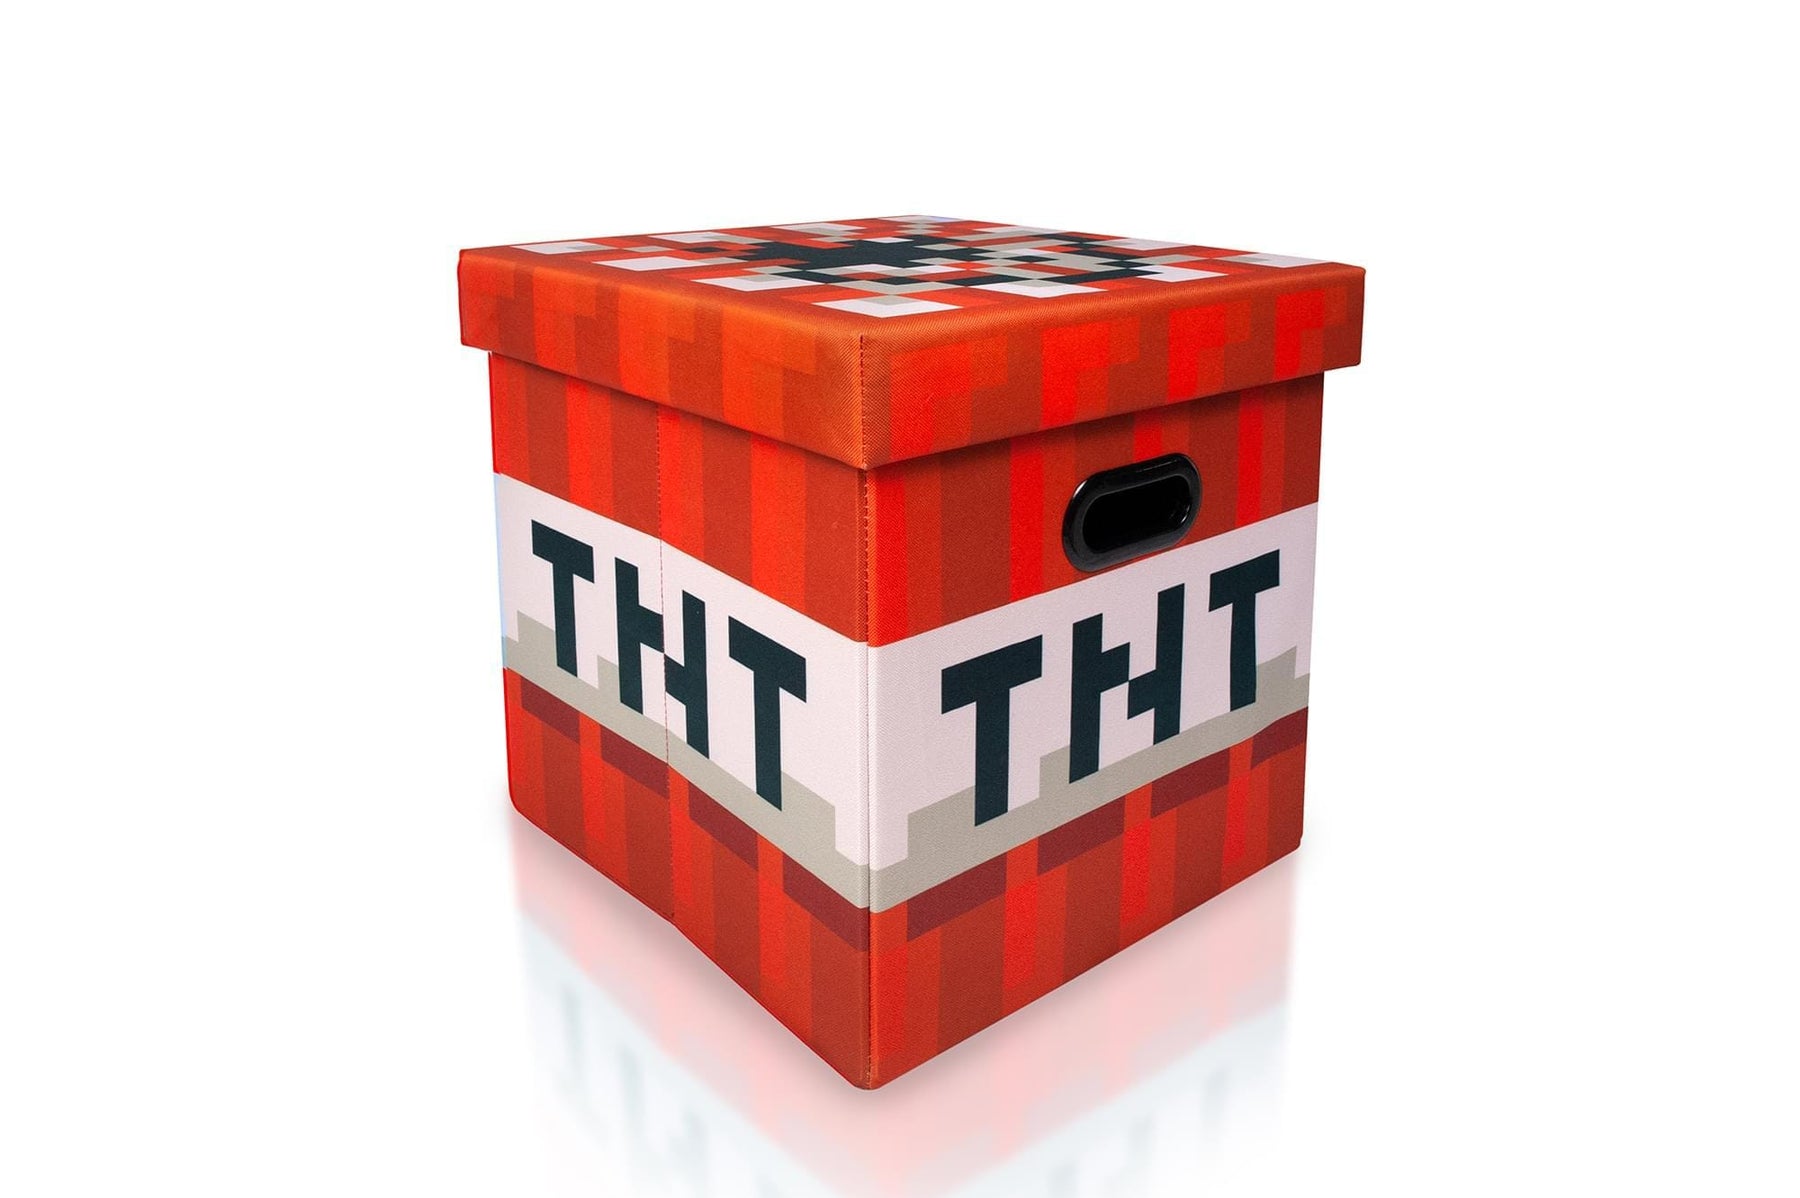 Minecraft Bee Fabric Storage Bin Cube Organizer with Lid 15 Inches